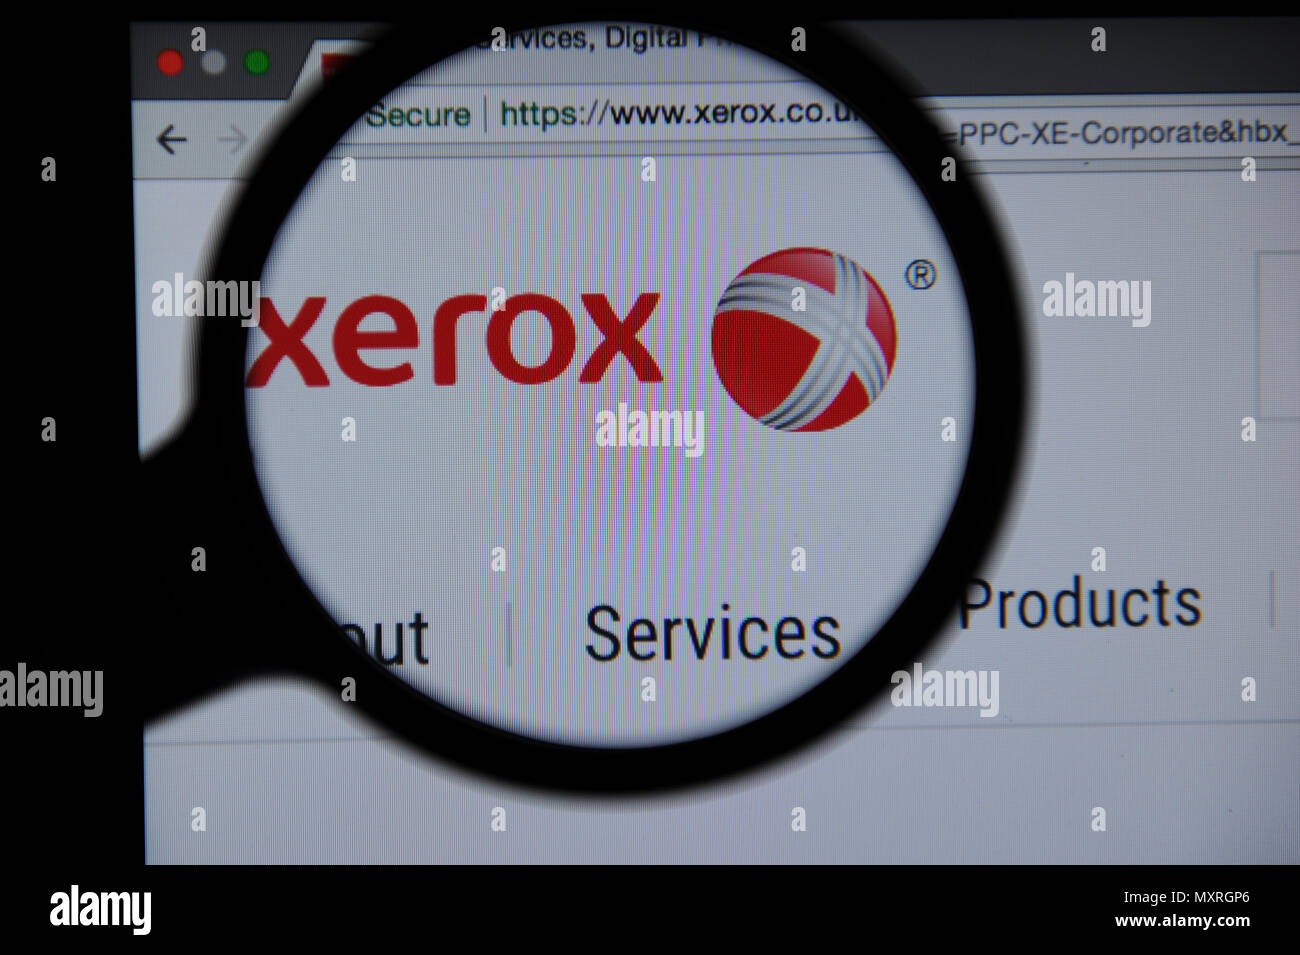 Xerox website seen through a magnifying glass Stock Photo